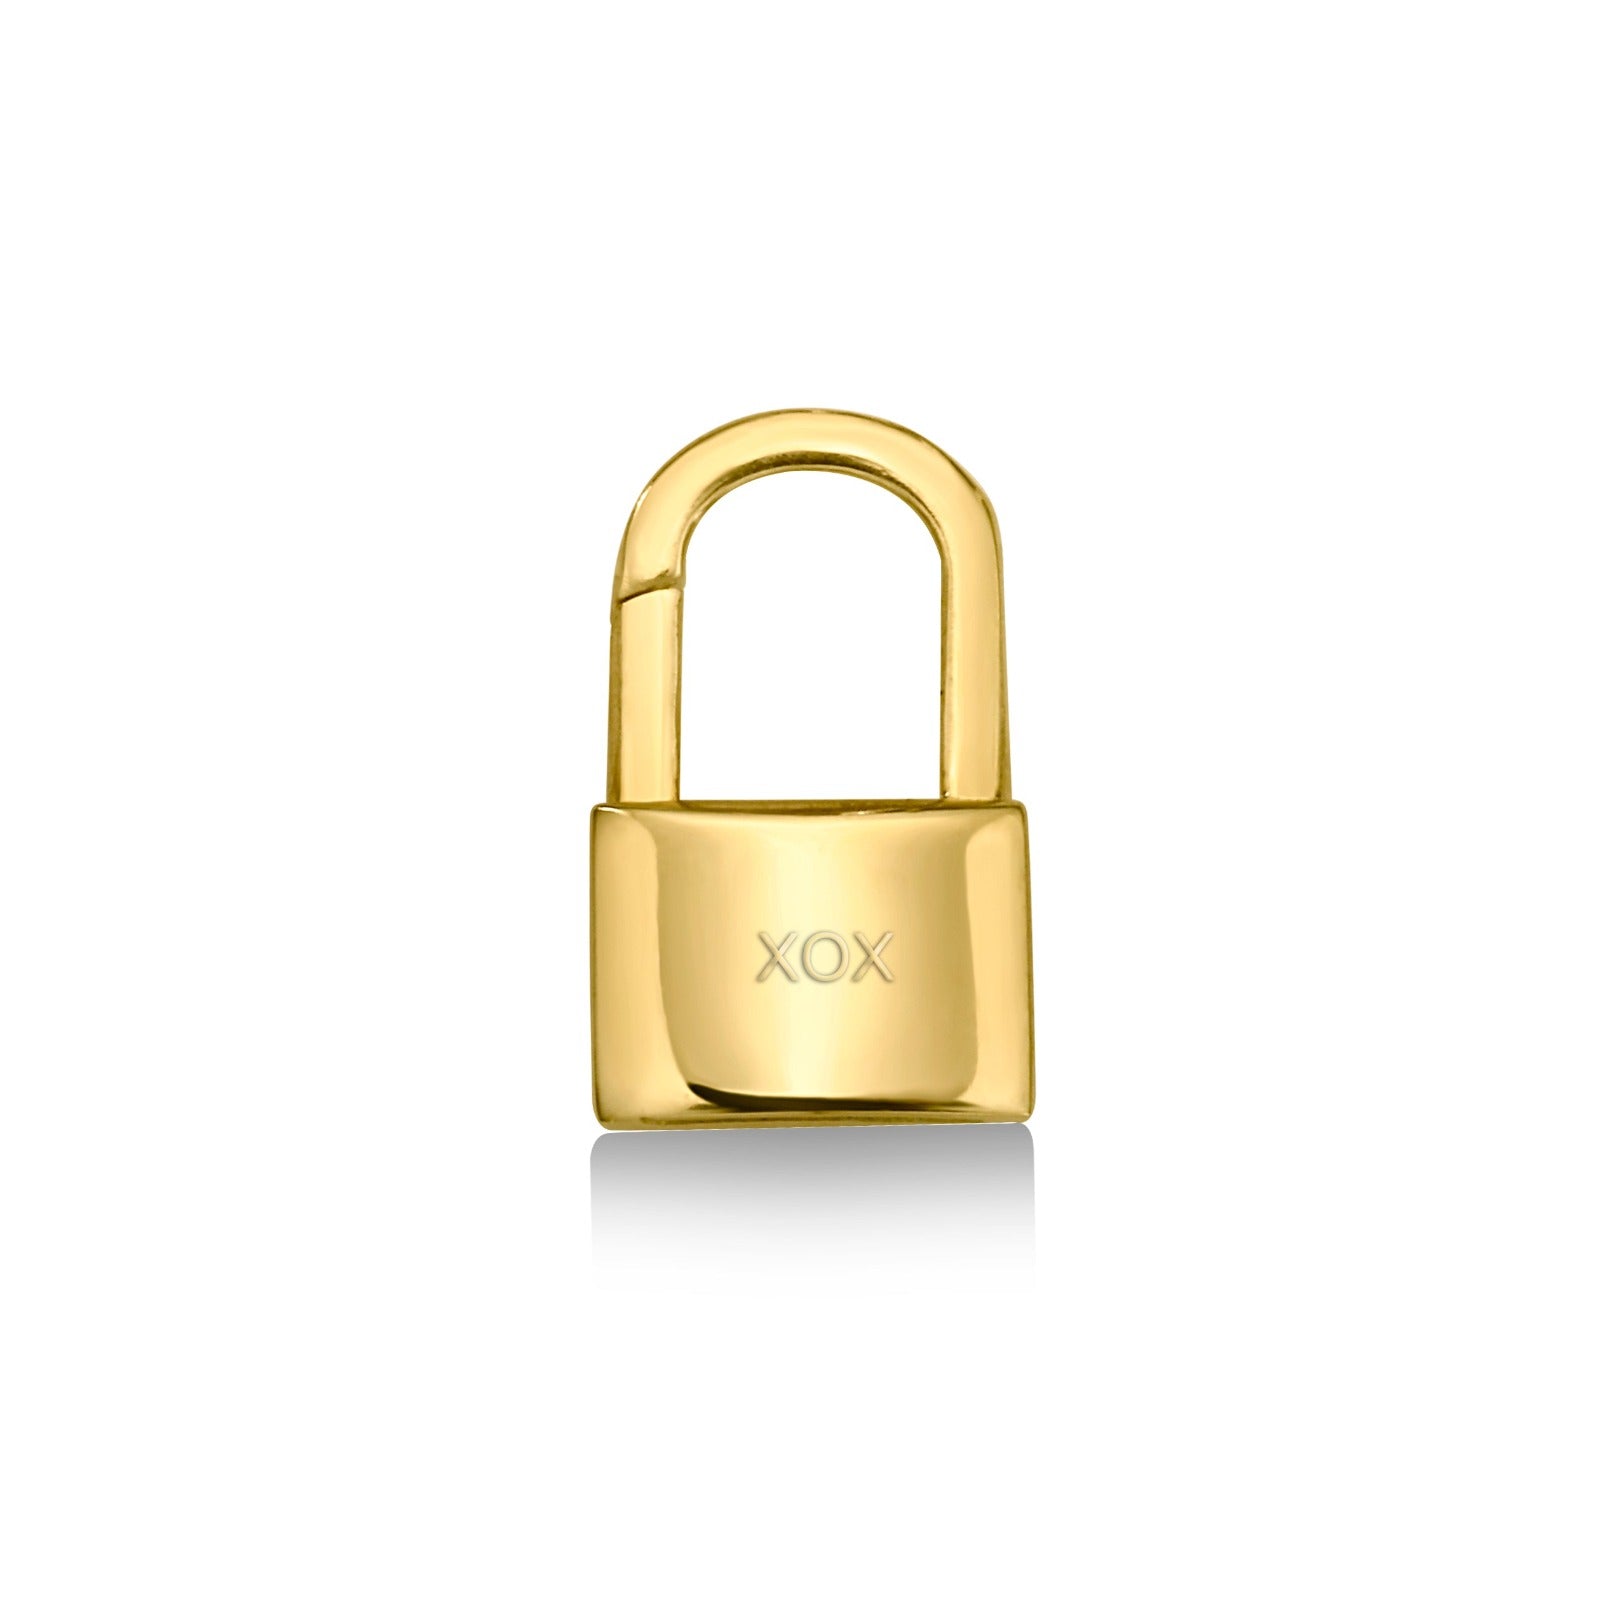 14k yellow gold padlock charm with XOX engraved.